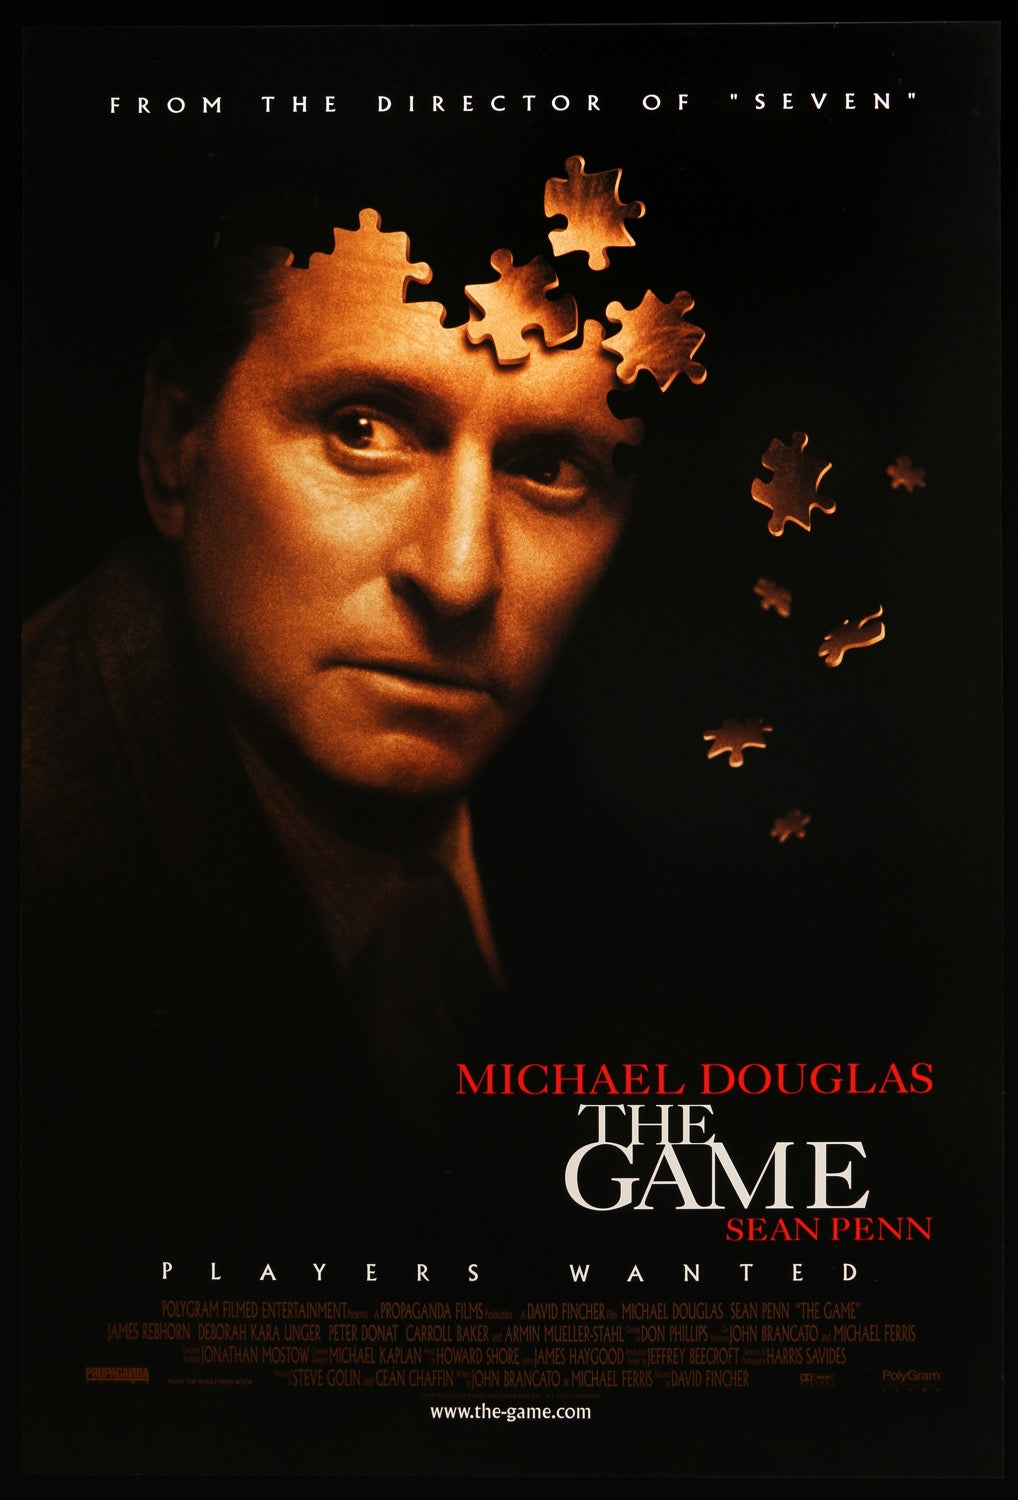 Game (1997) original movie poster for sale at Original Film Art